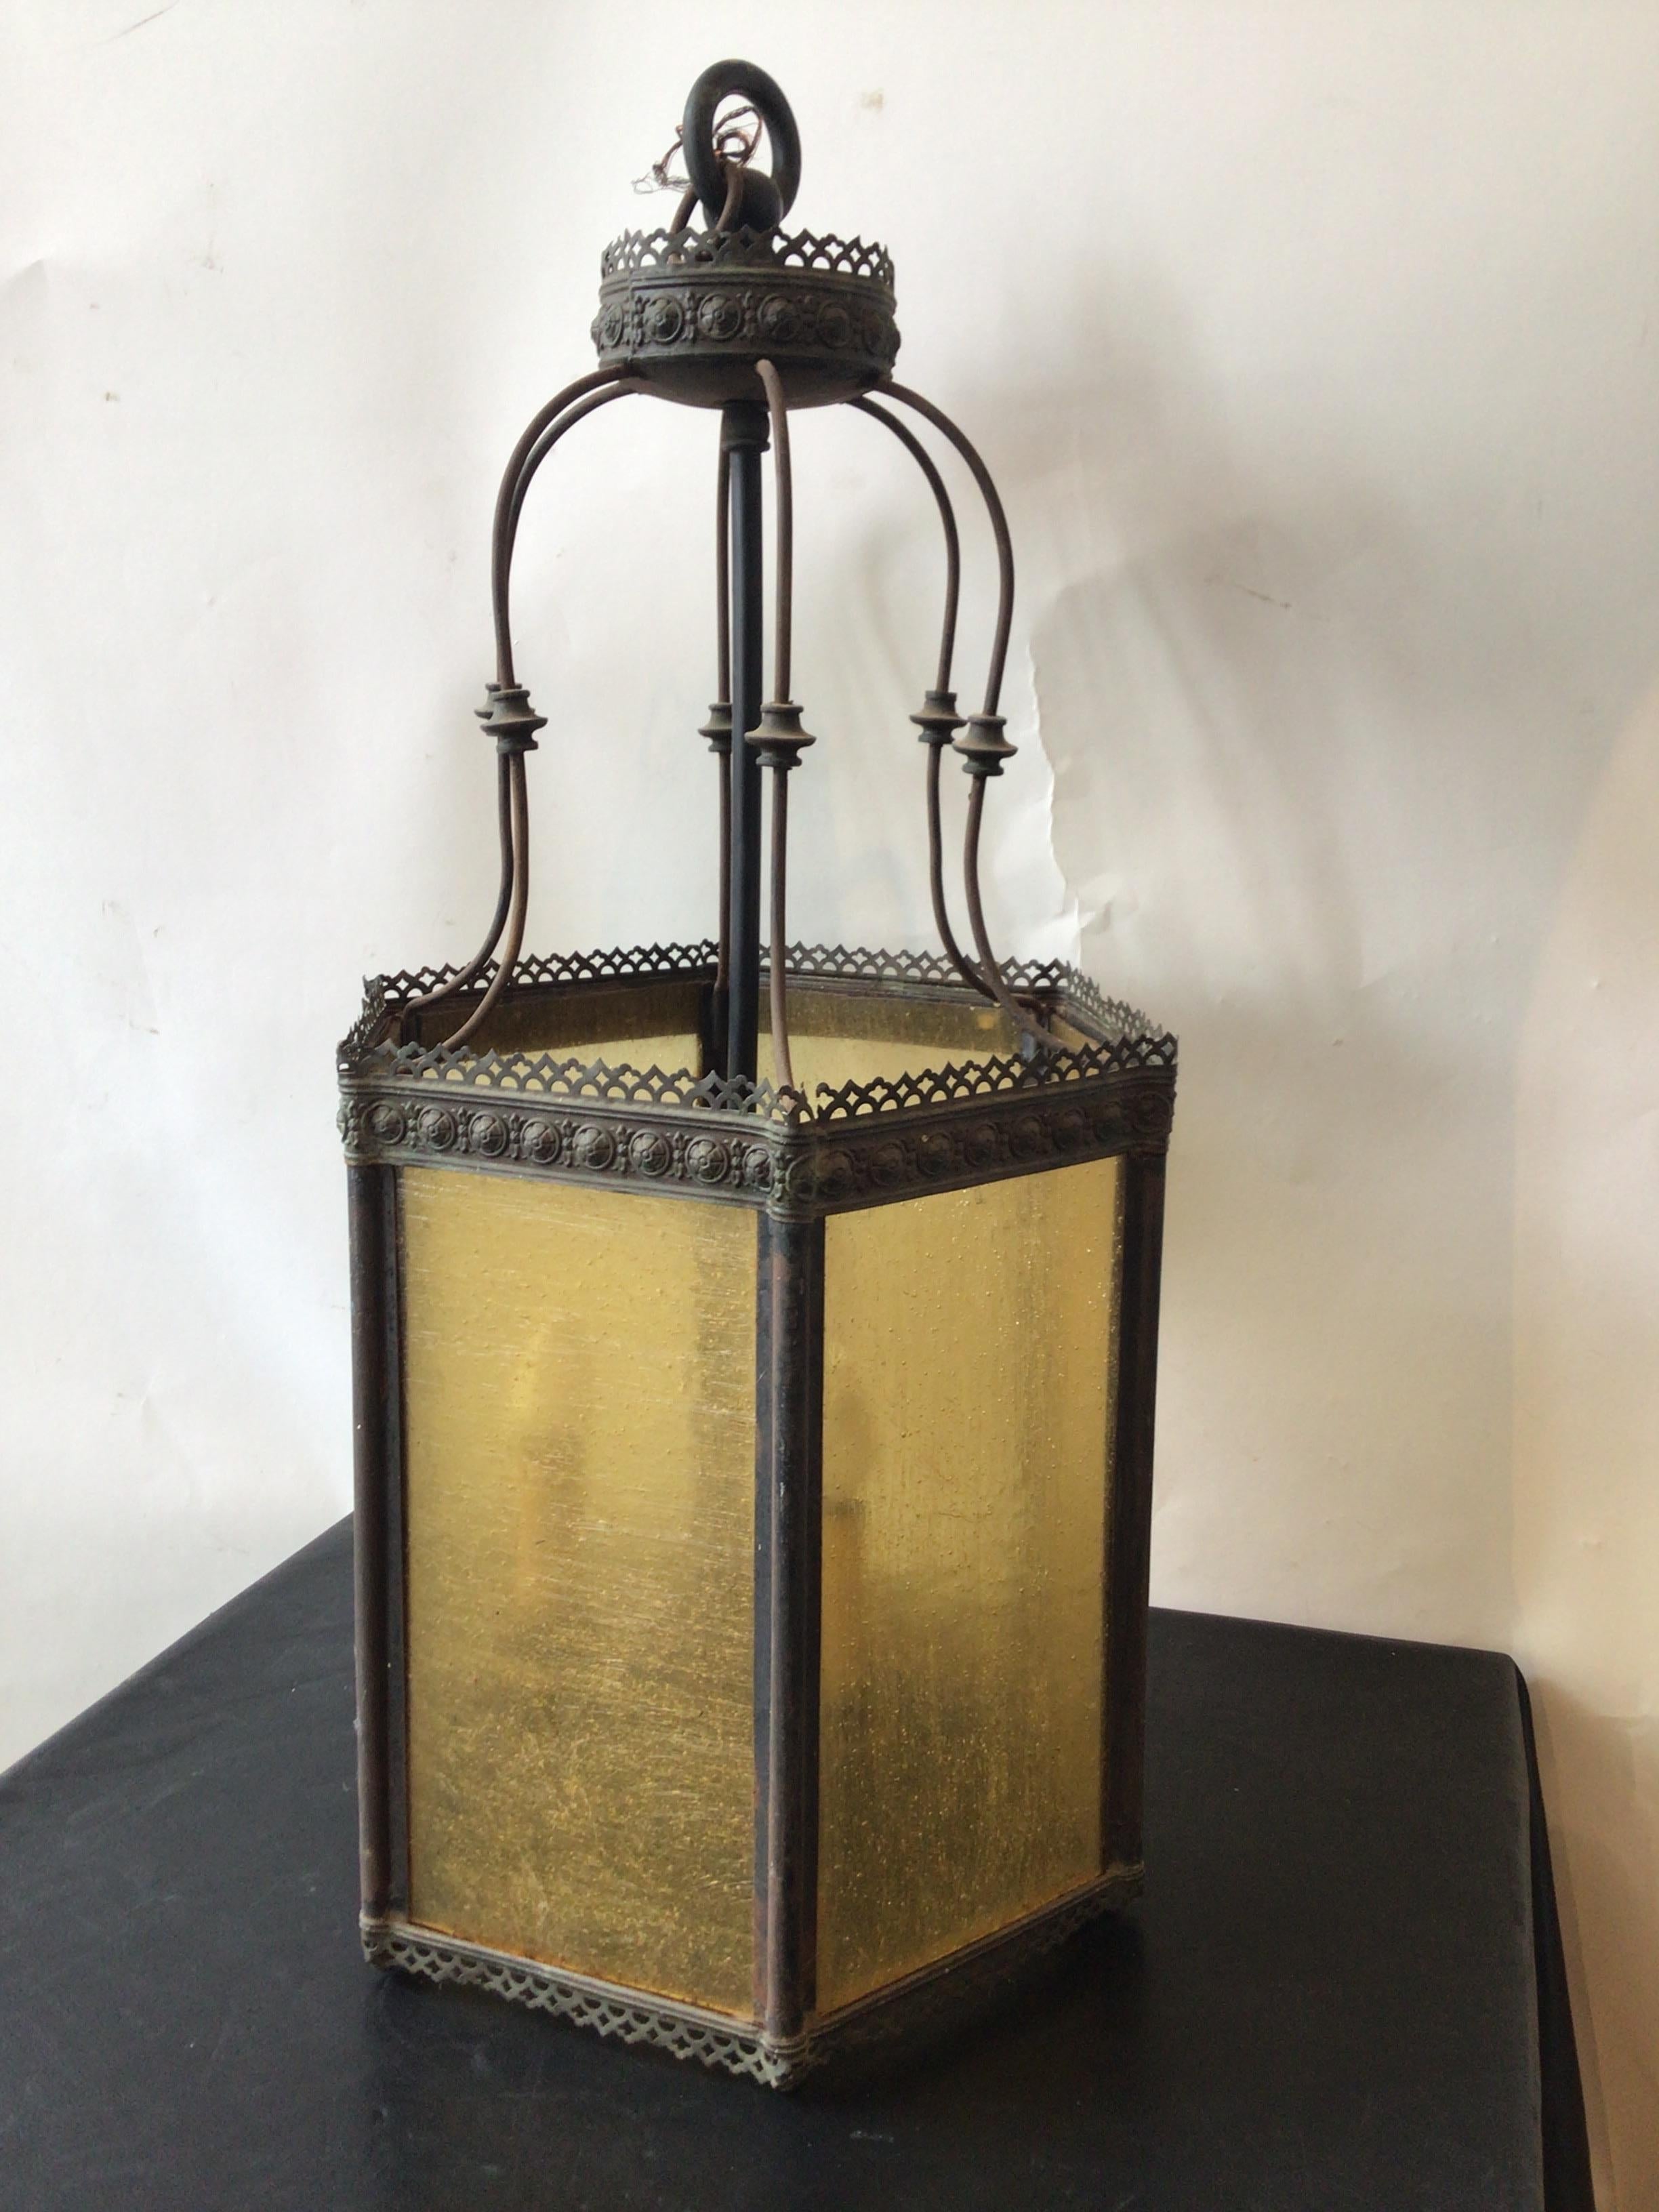 1890s Amber glass lantern. Originally a gas lantern.